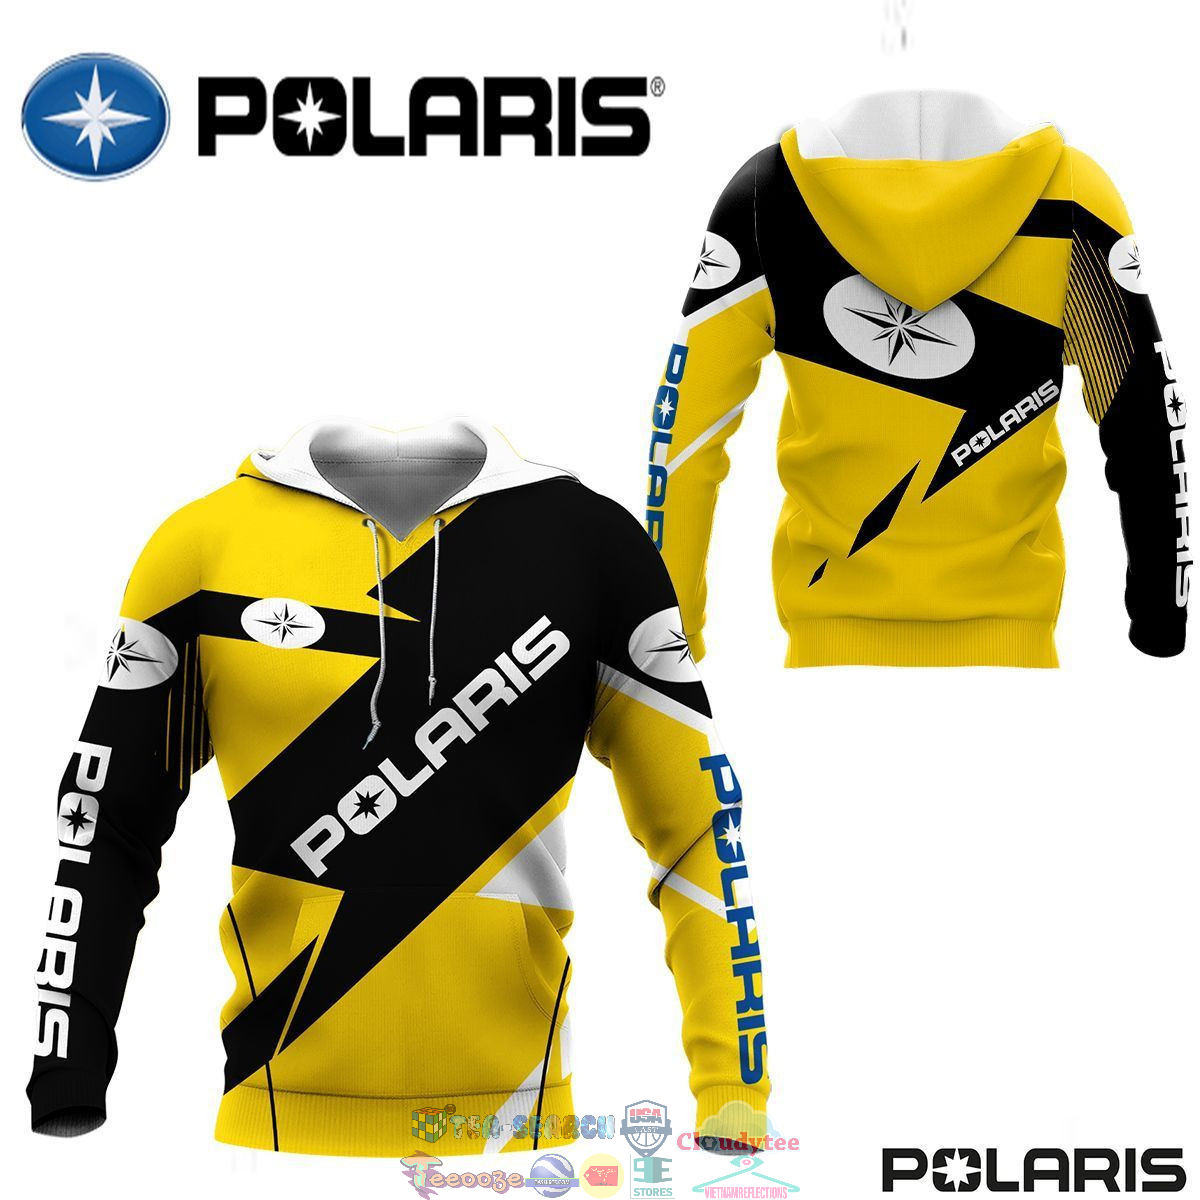 Polaris ver 2 3D hoodie and t-shirt